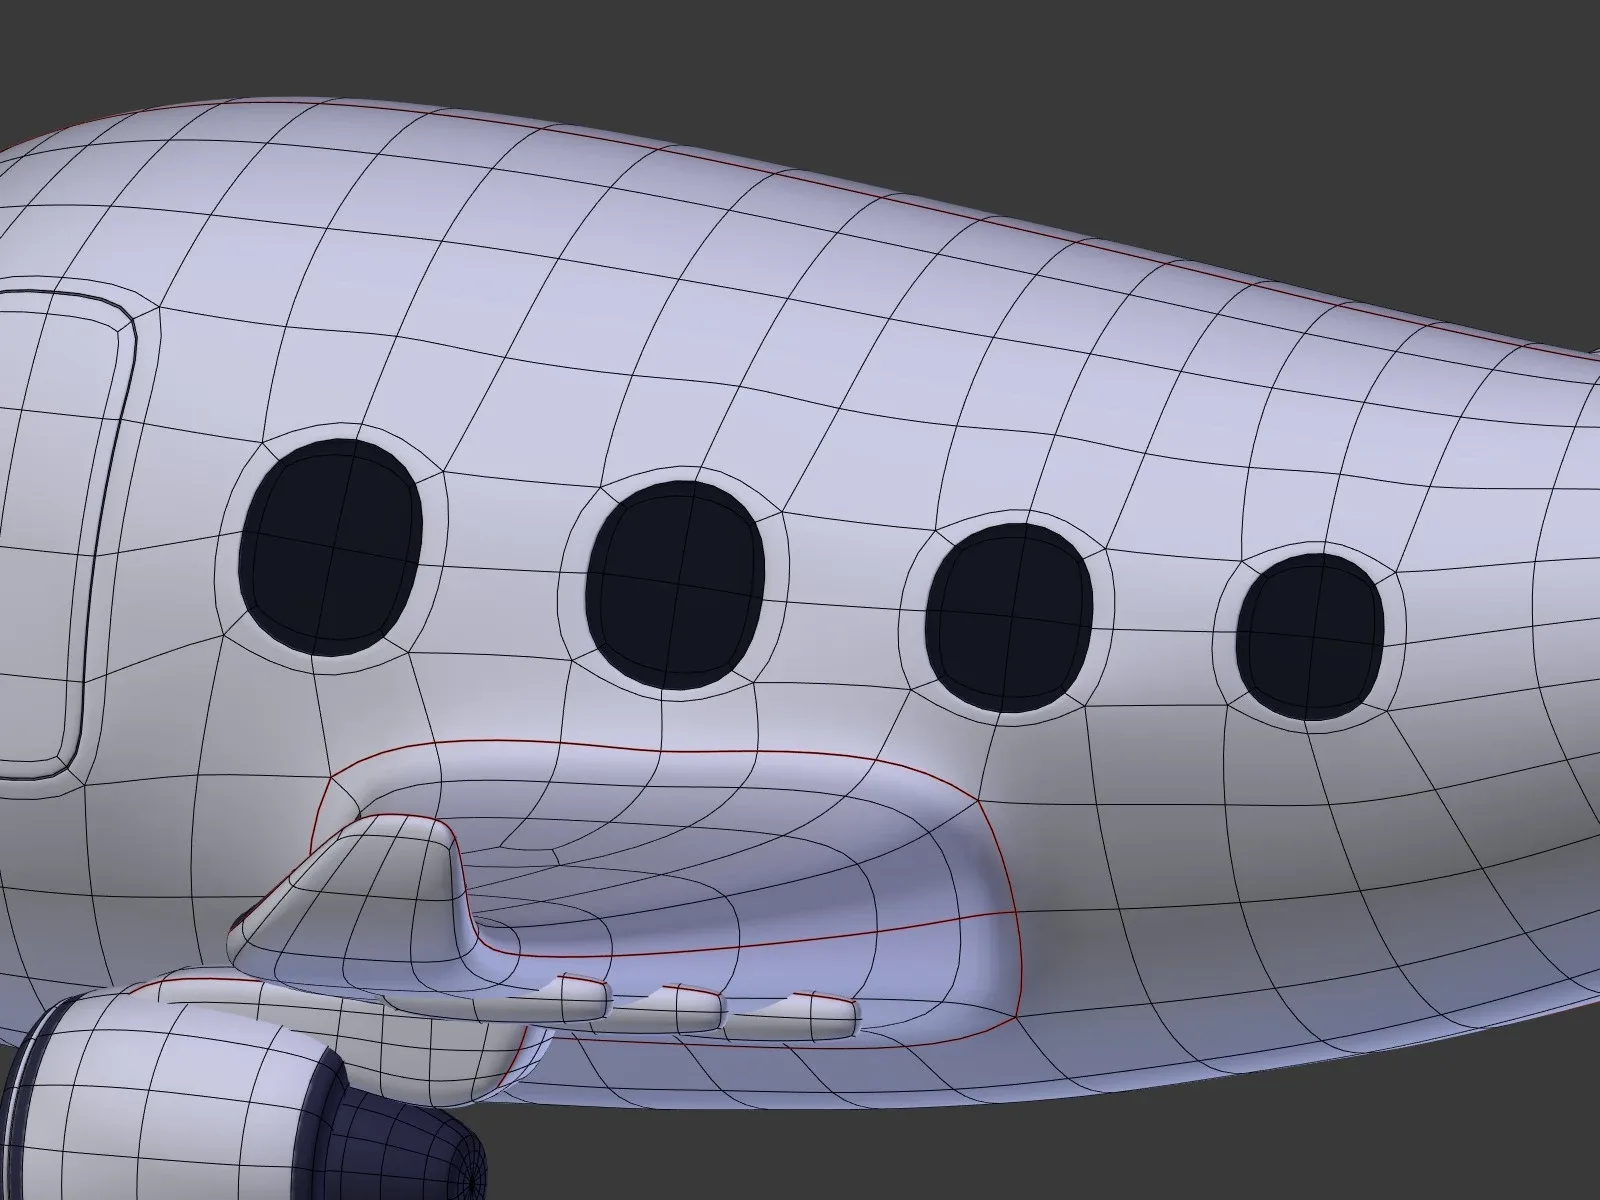 Cartoon Plane - Airplane - Airliner